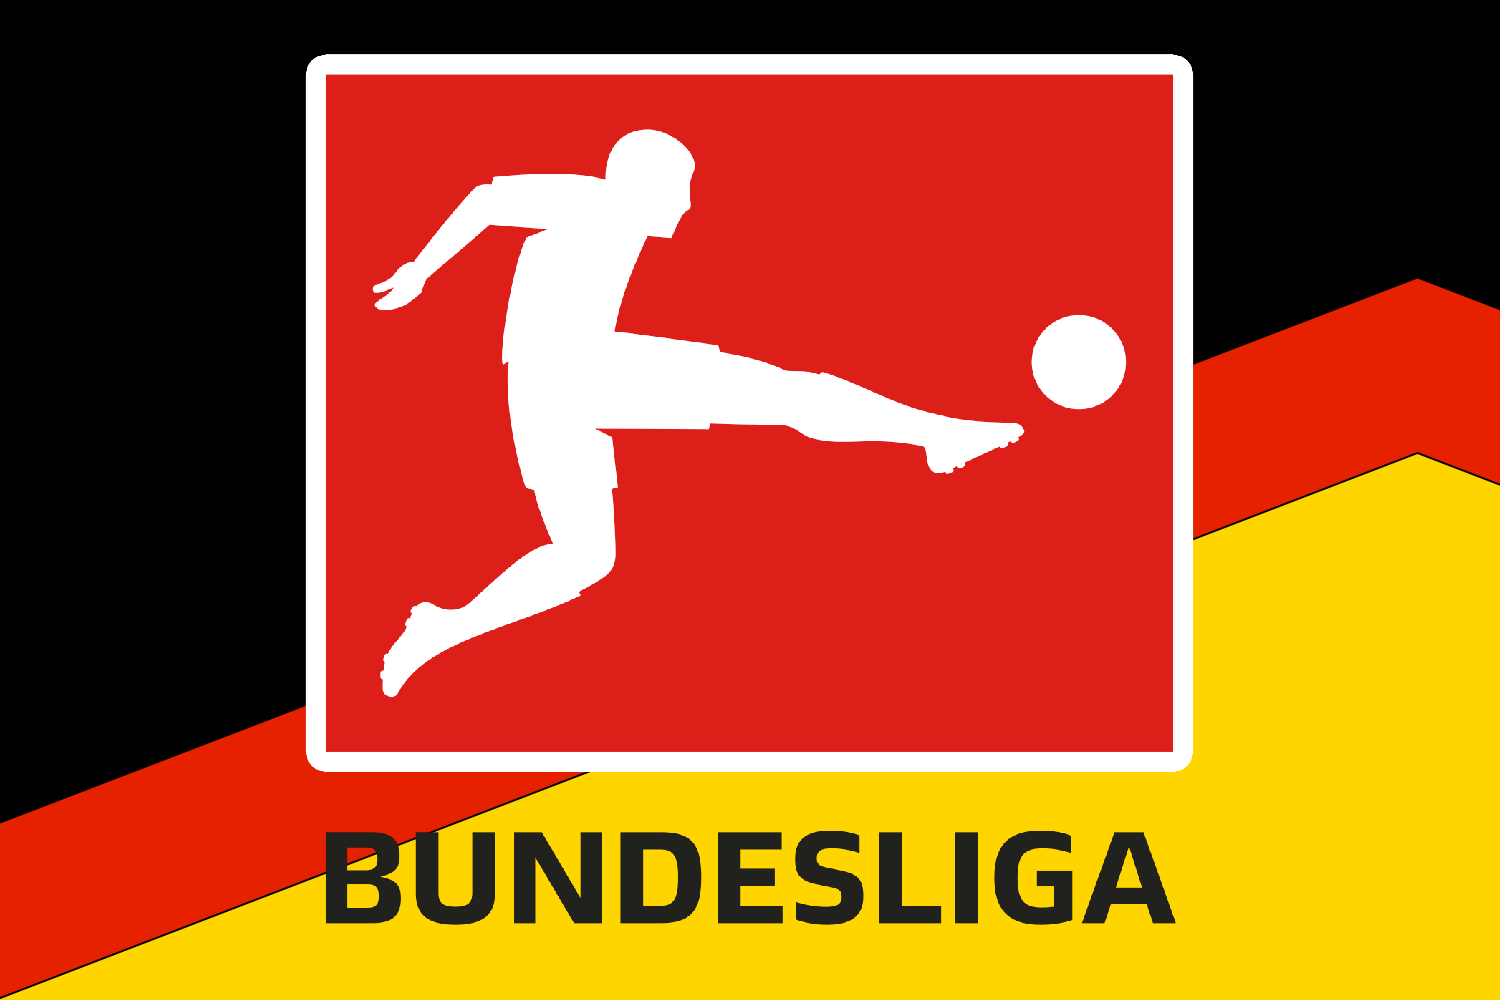 How to watch German Bundesliga football live Stuff